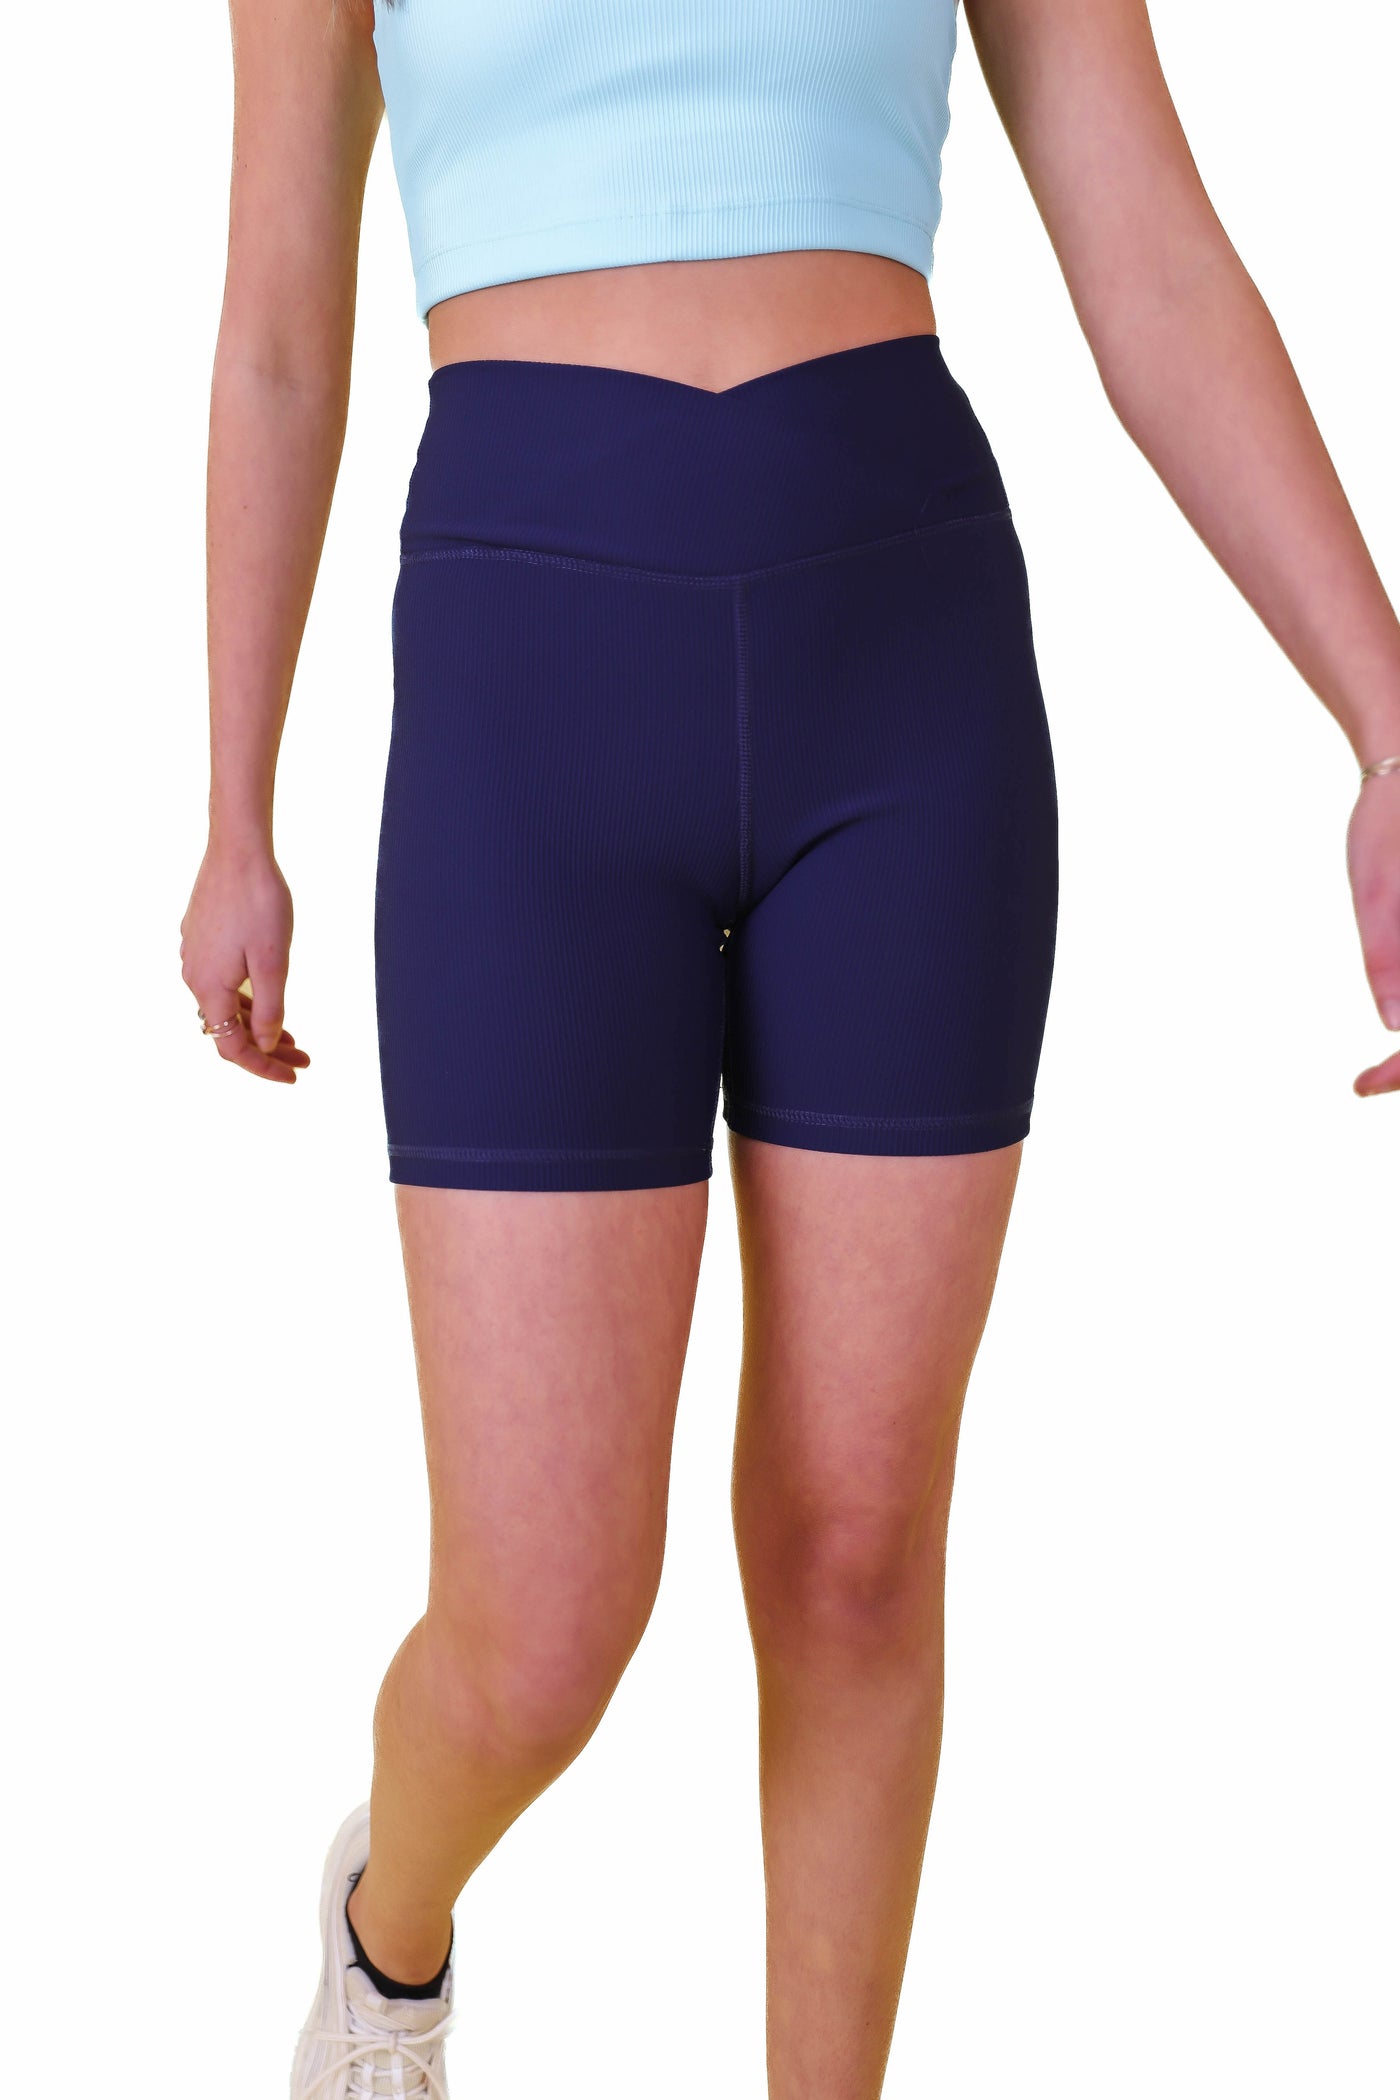 Navy Crossover Biker Shorts- Navy Ribbed Biker Shorts- Affordable Women's Workout Wear